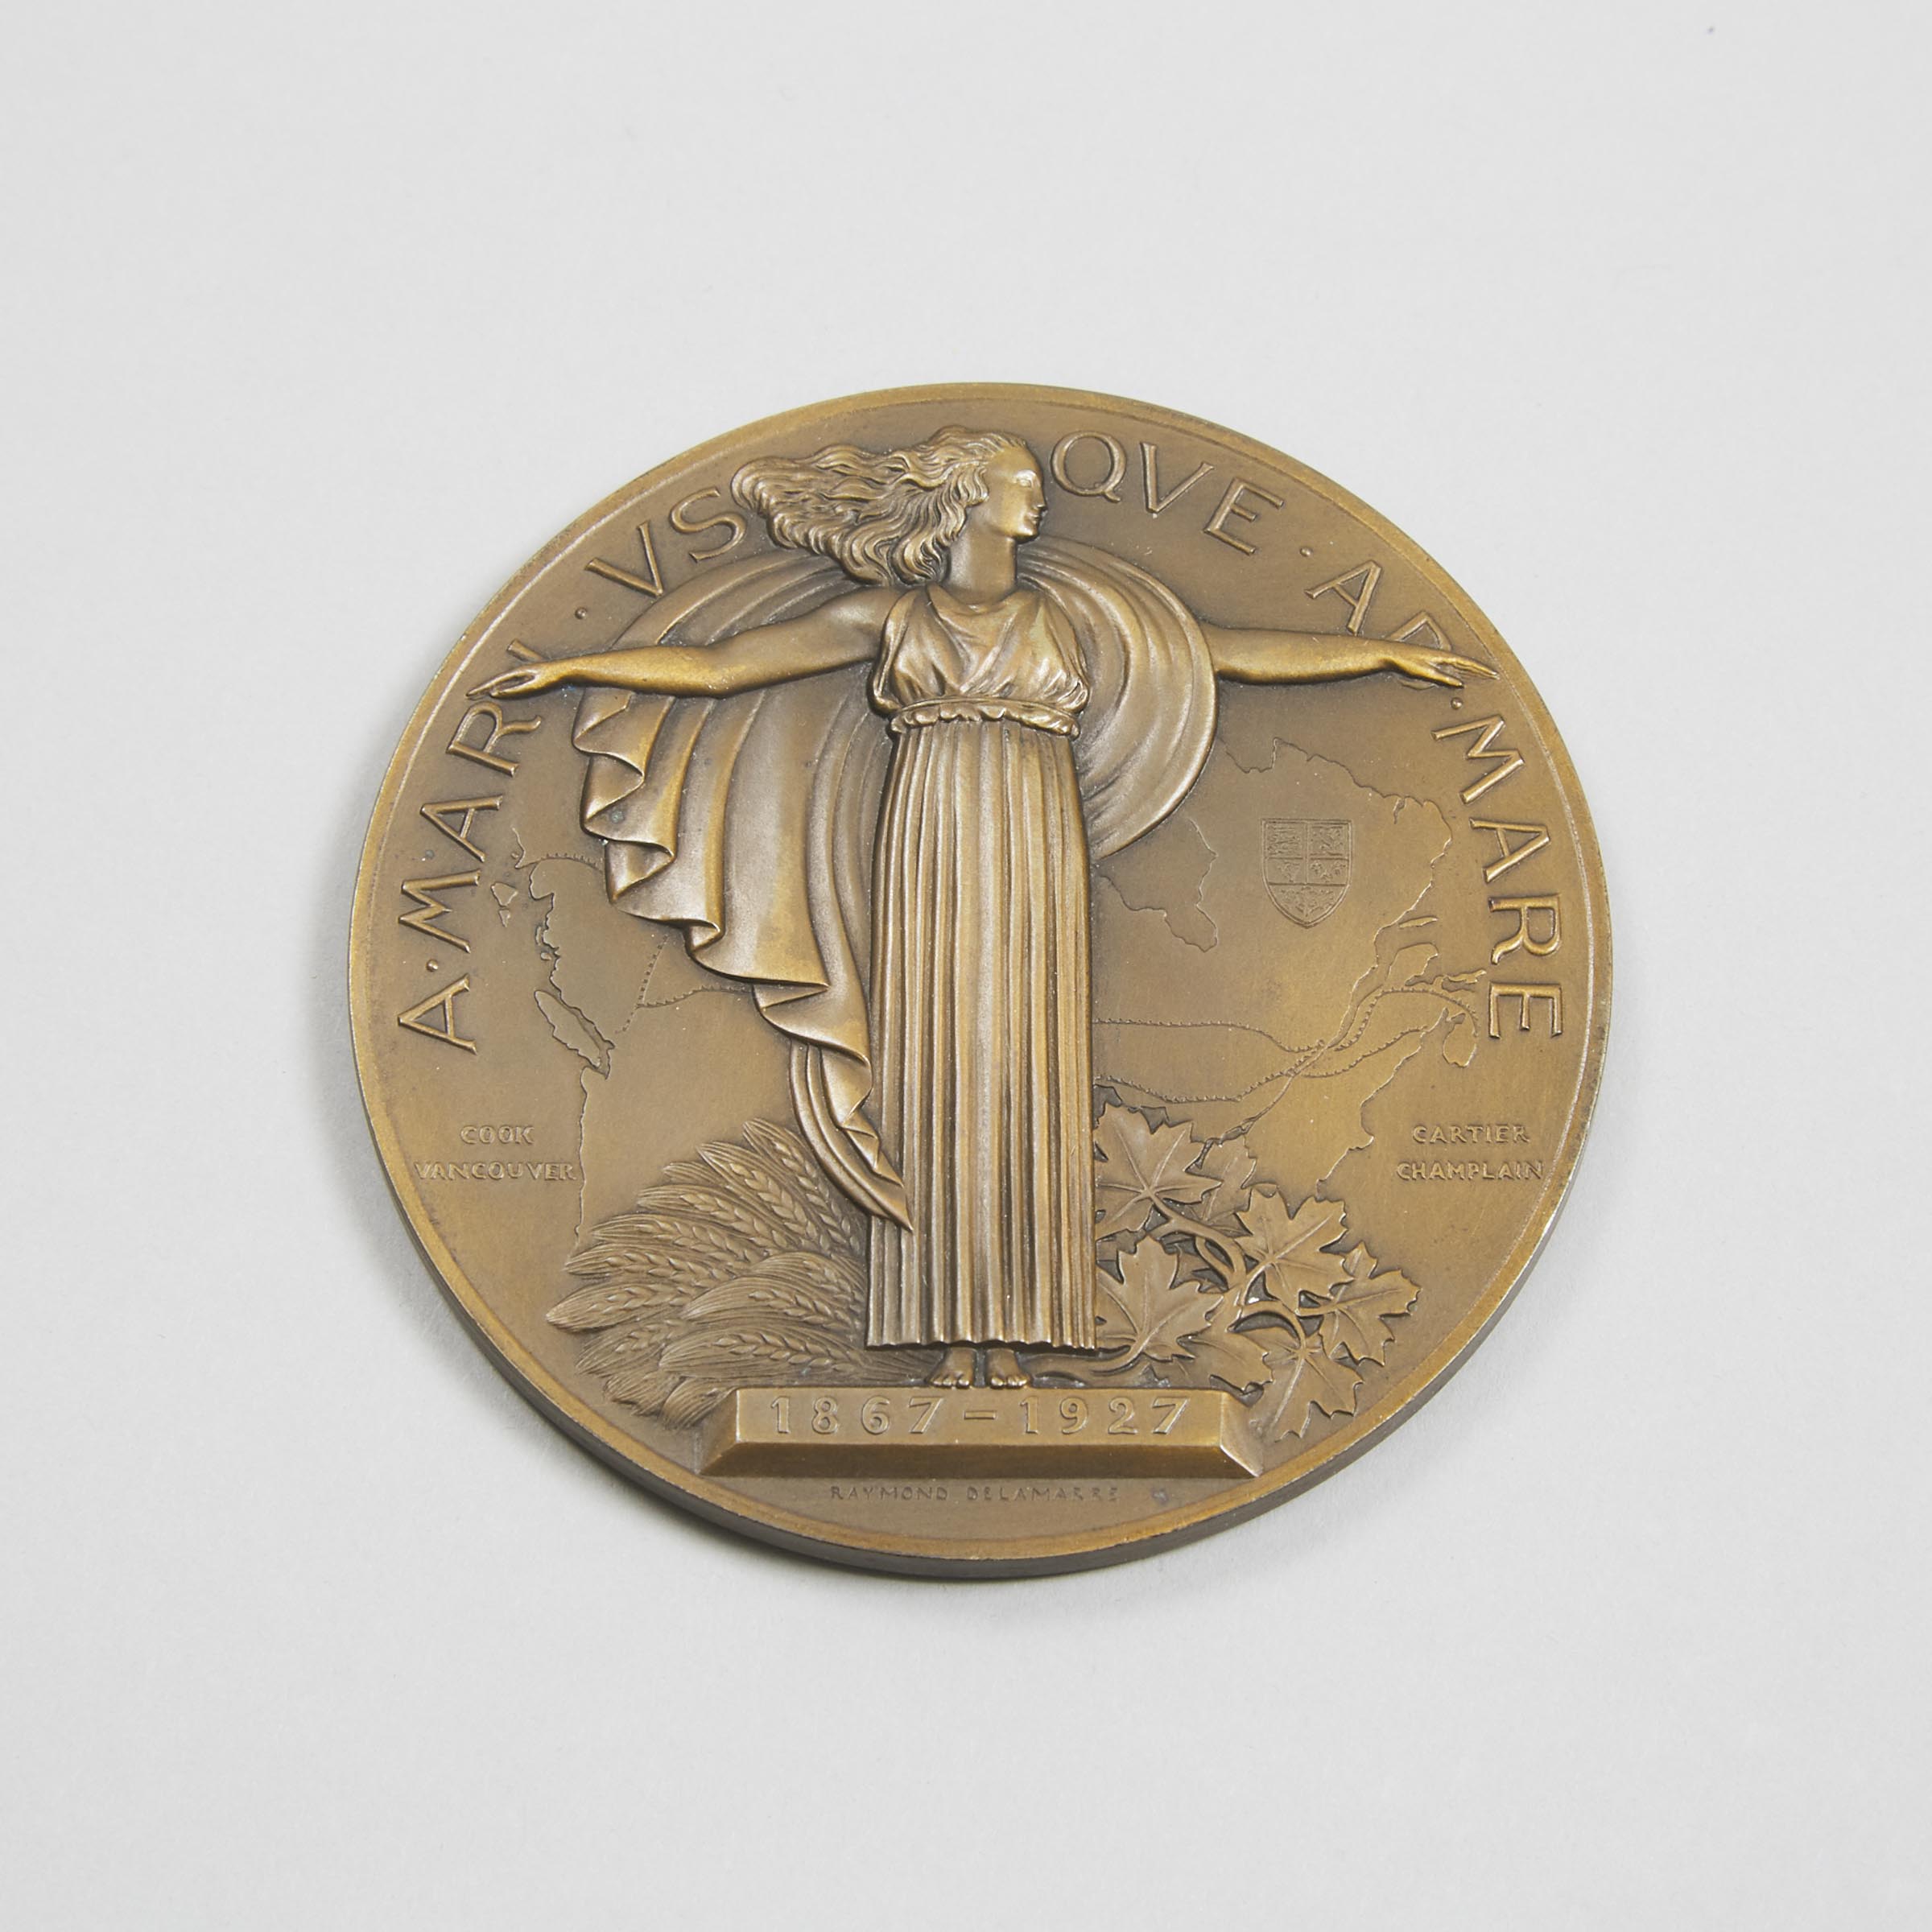 Canadian Confederation Diamond Jubilee Medallion by Raymond Delamarre, 1927 